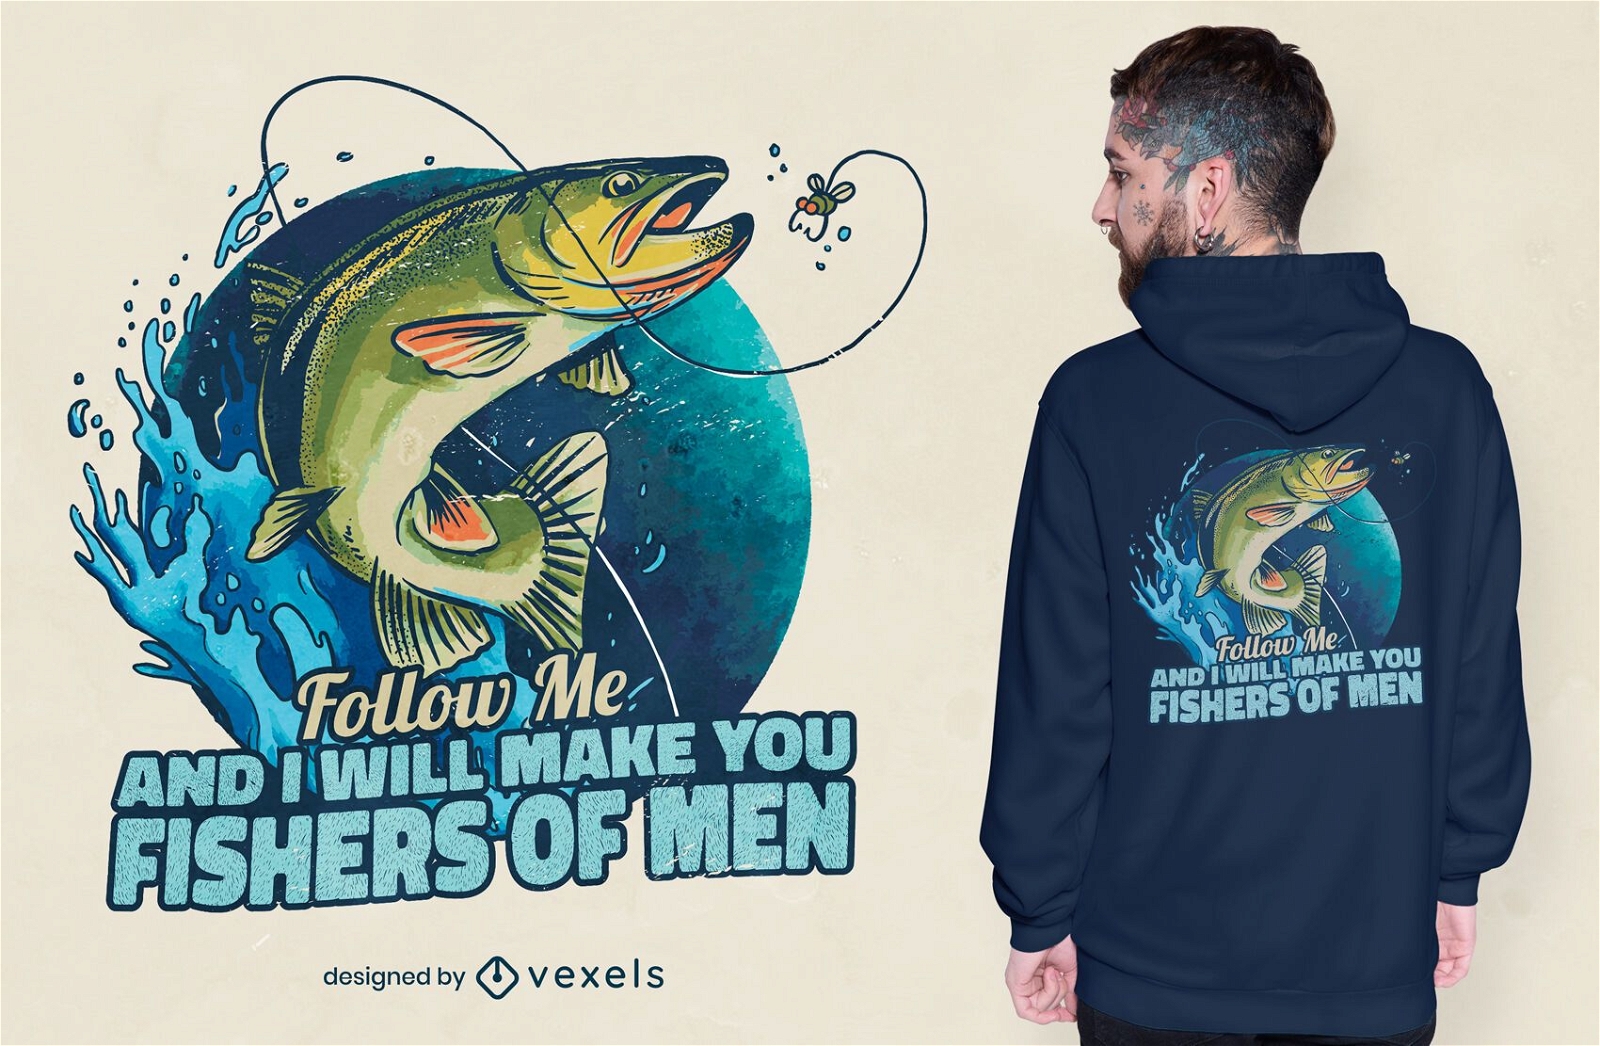 Dise?o de camiseta de cita de animales marinos de peces.